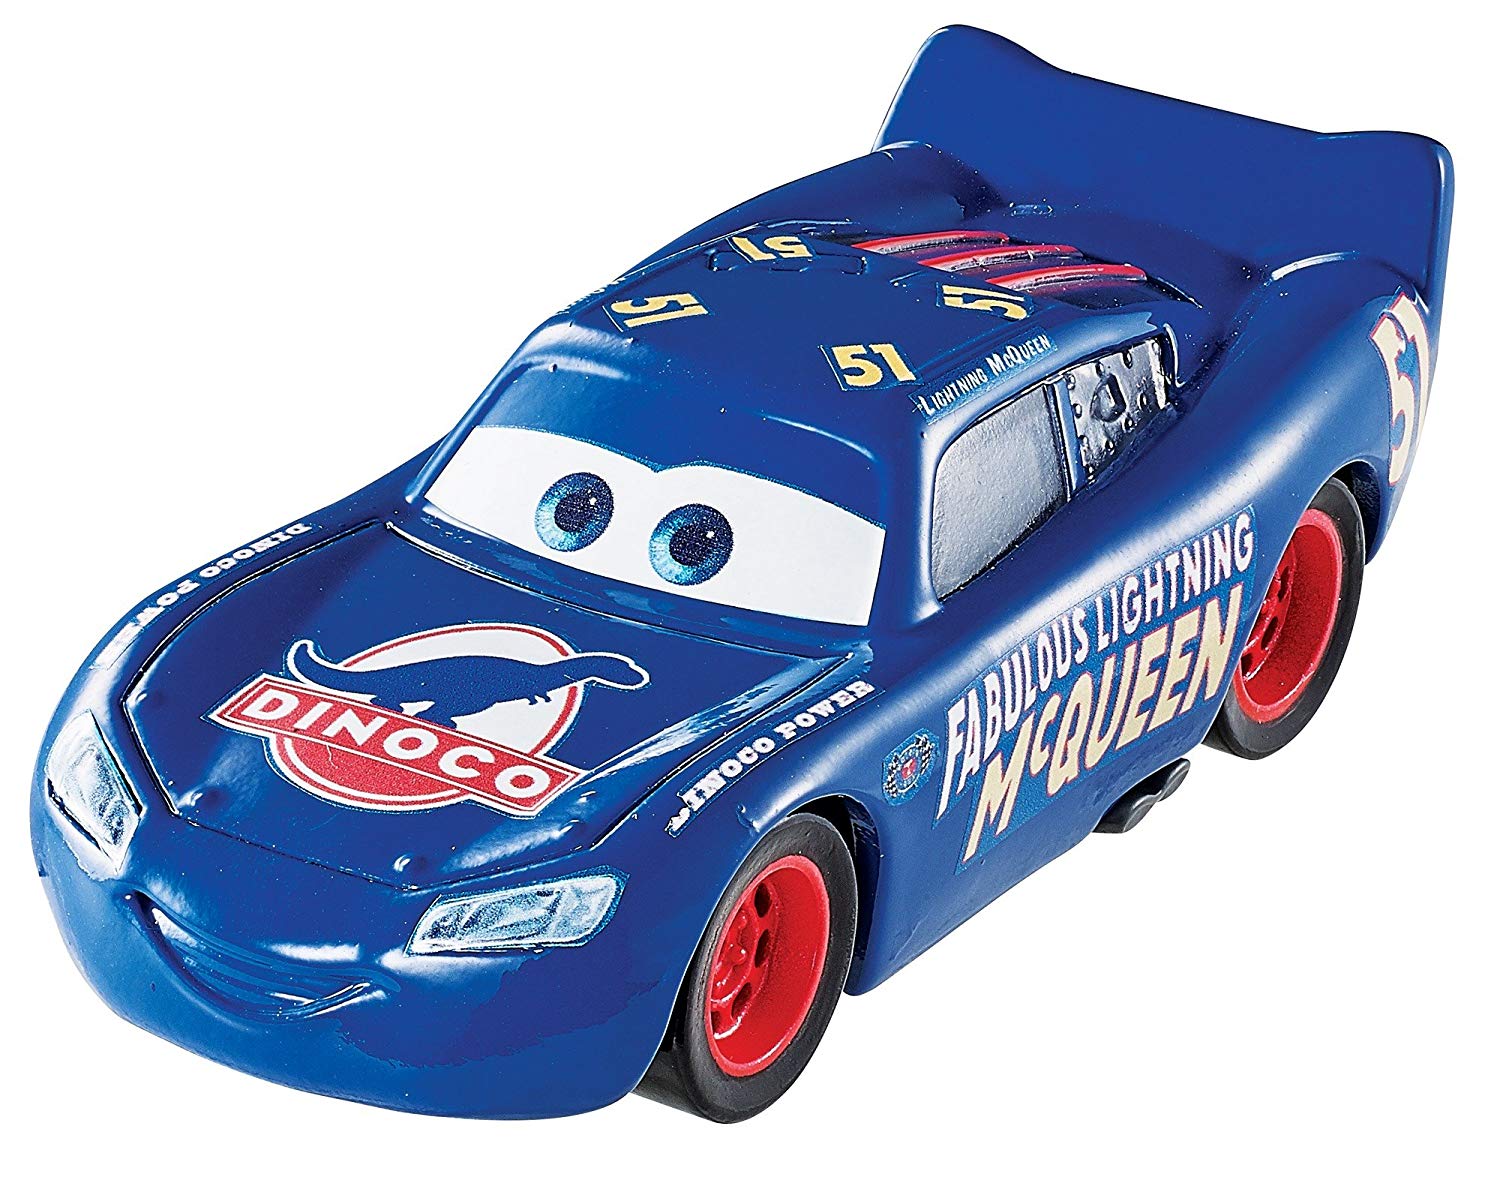 Disney Pixar Cars 3 Dinoco Blue Lightning Mcqueen Die-cast 